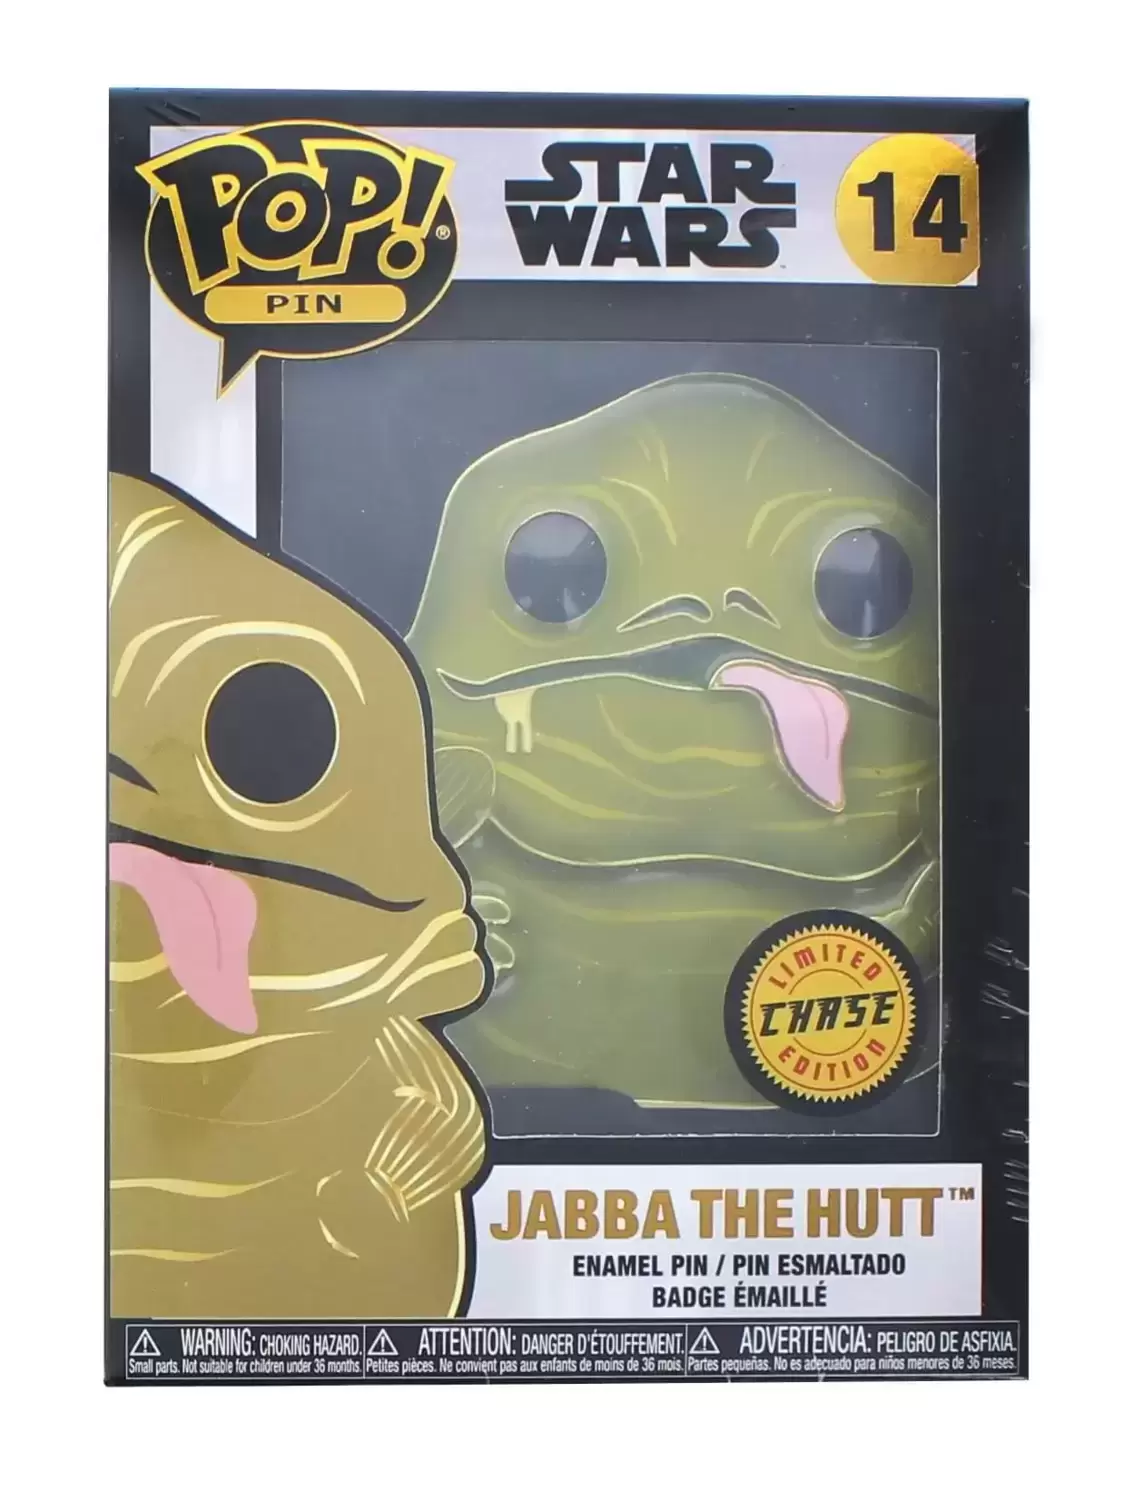 POP! Pin Star Wars - Jabba the Hutt Chase